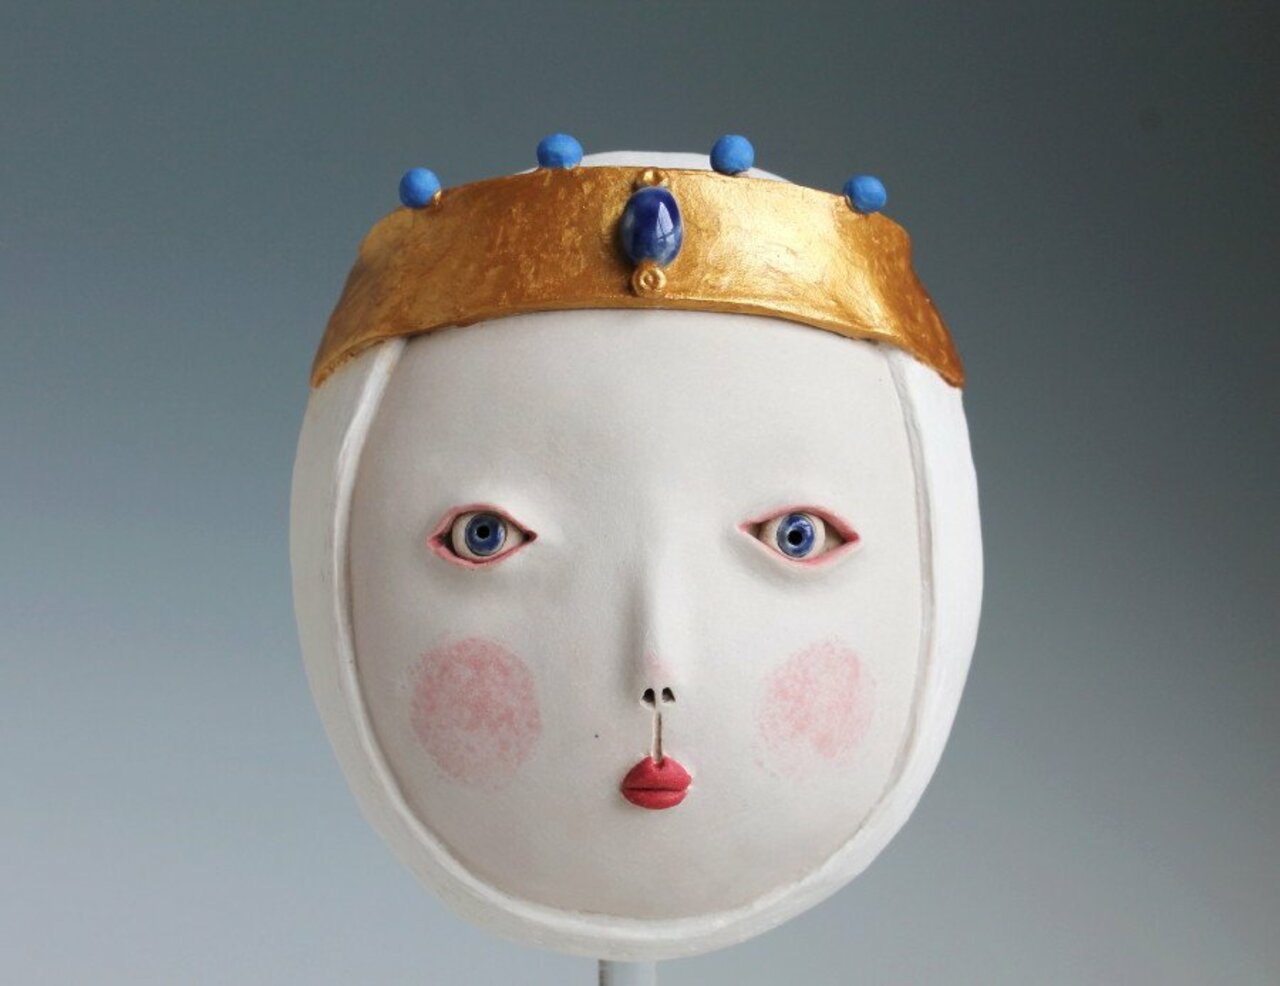 RT @MidoriTakaki: 'Eleanor of Aquitaine' on my blog, DoGoo - Contemporary Clay Idols http://dogoo-midori.blogspot.com/2015/11/eleanor-of-aquitaine.html?spref=tw #medieval #ceramics #mask https://t.co/zjY0wqklDM